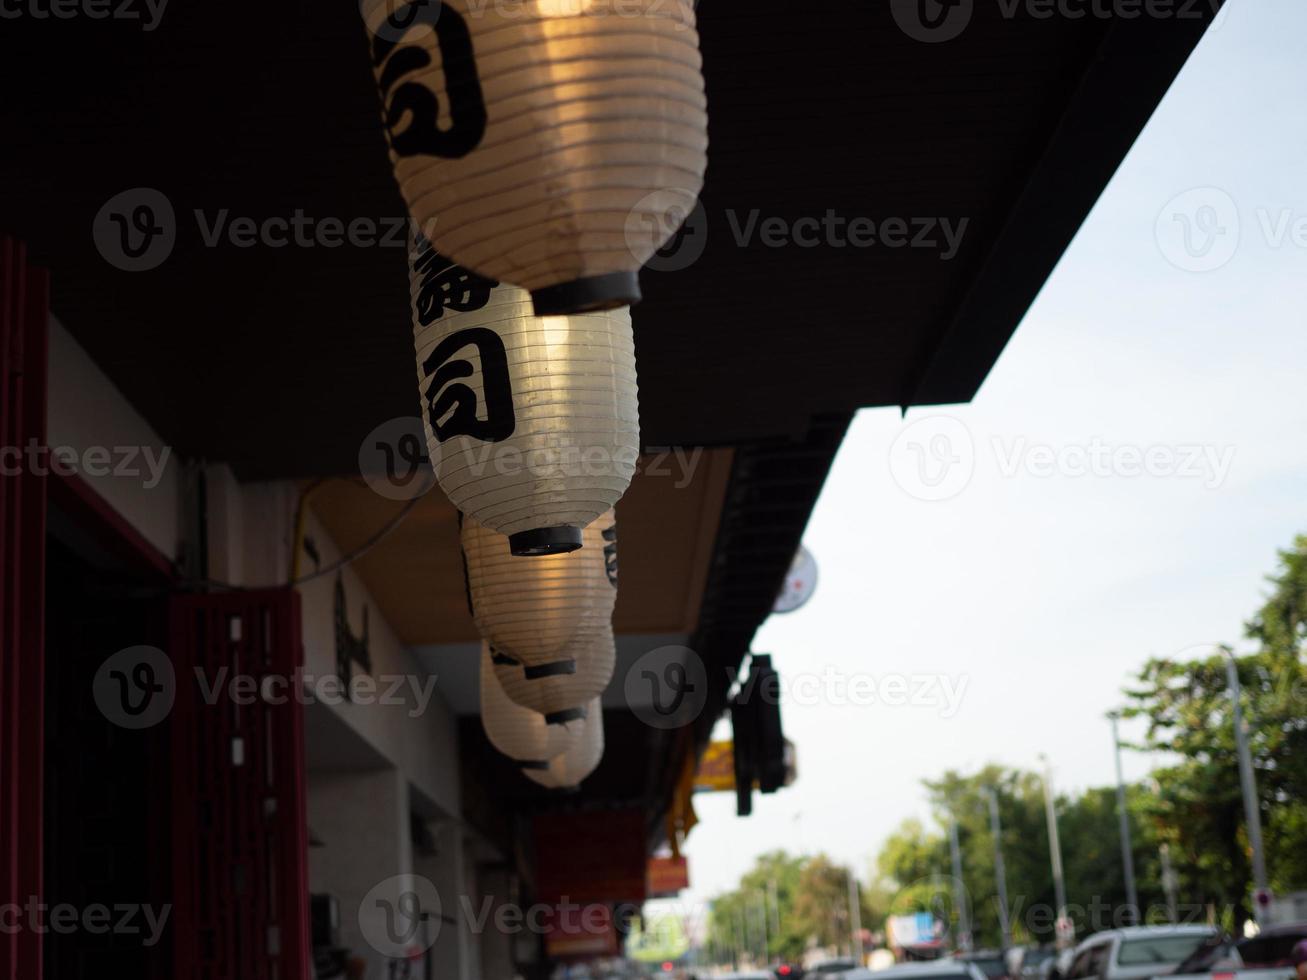 lanterna japonesa pendurada na frente do restaurante japonês, texto japonês na lanterna é comida japonesa de sushi. foto